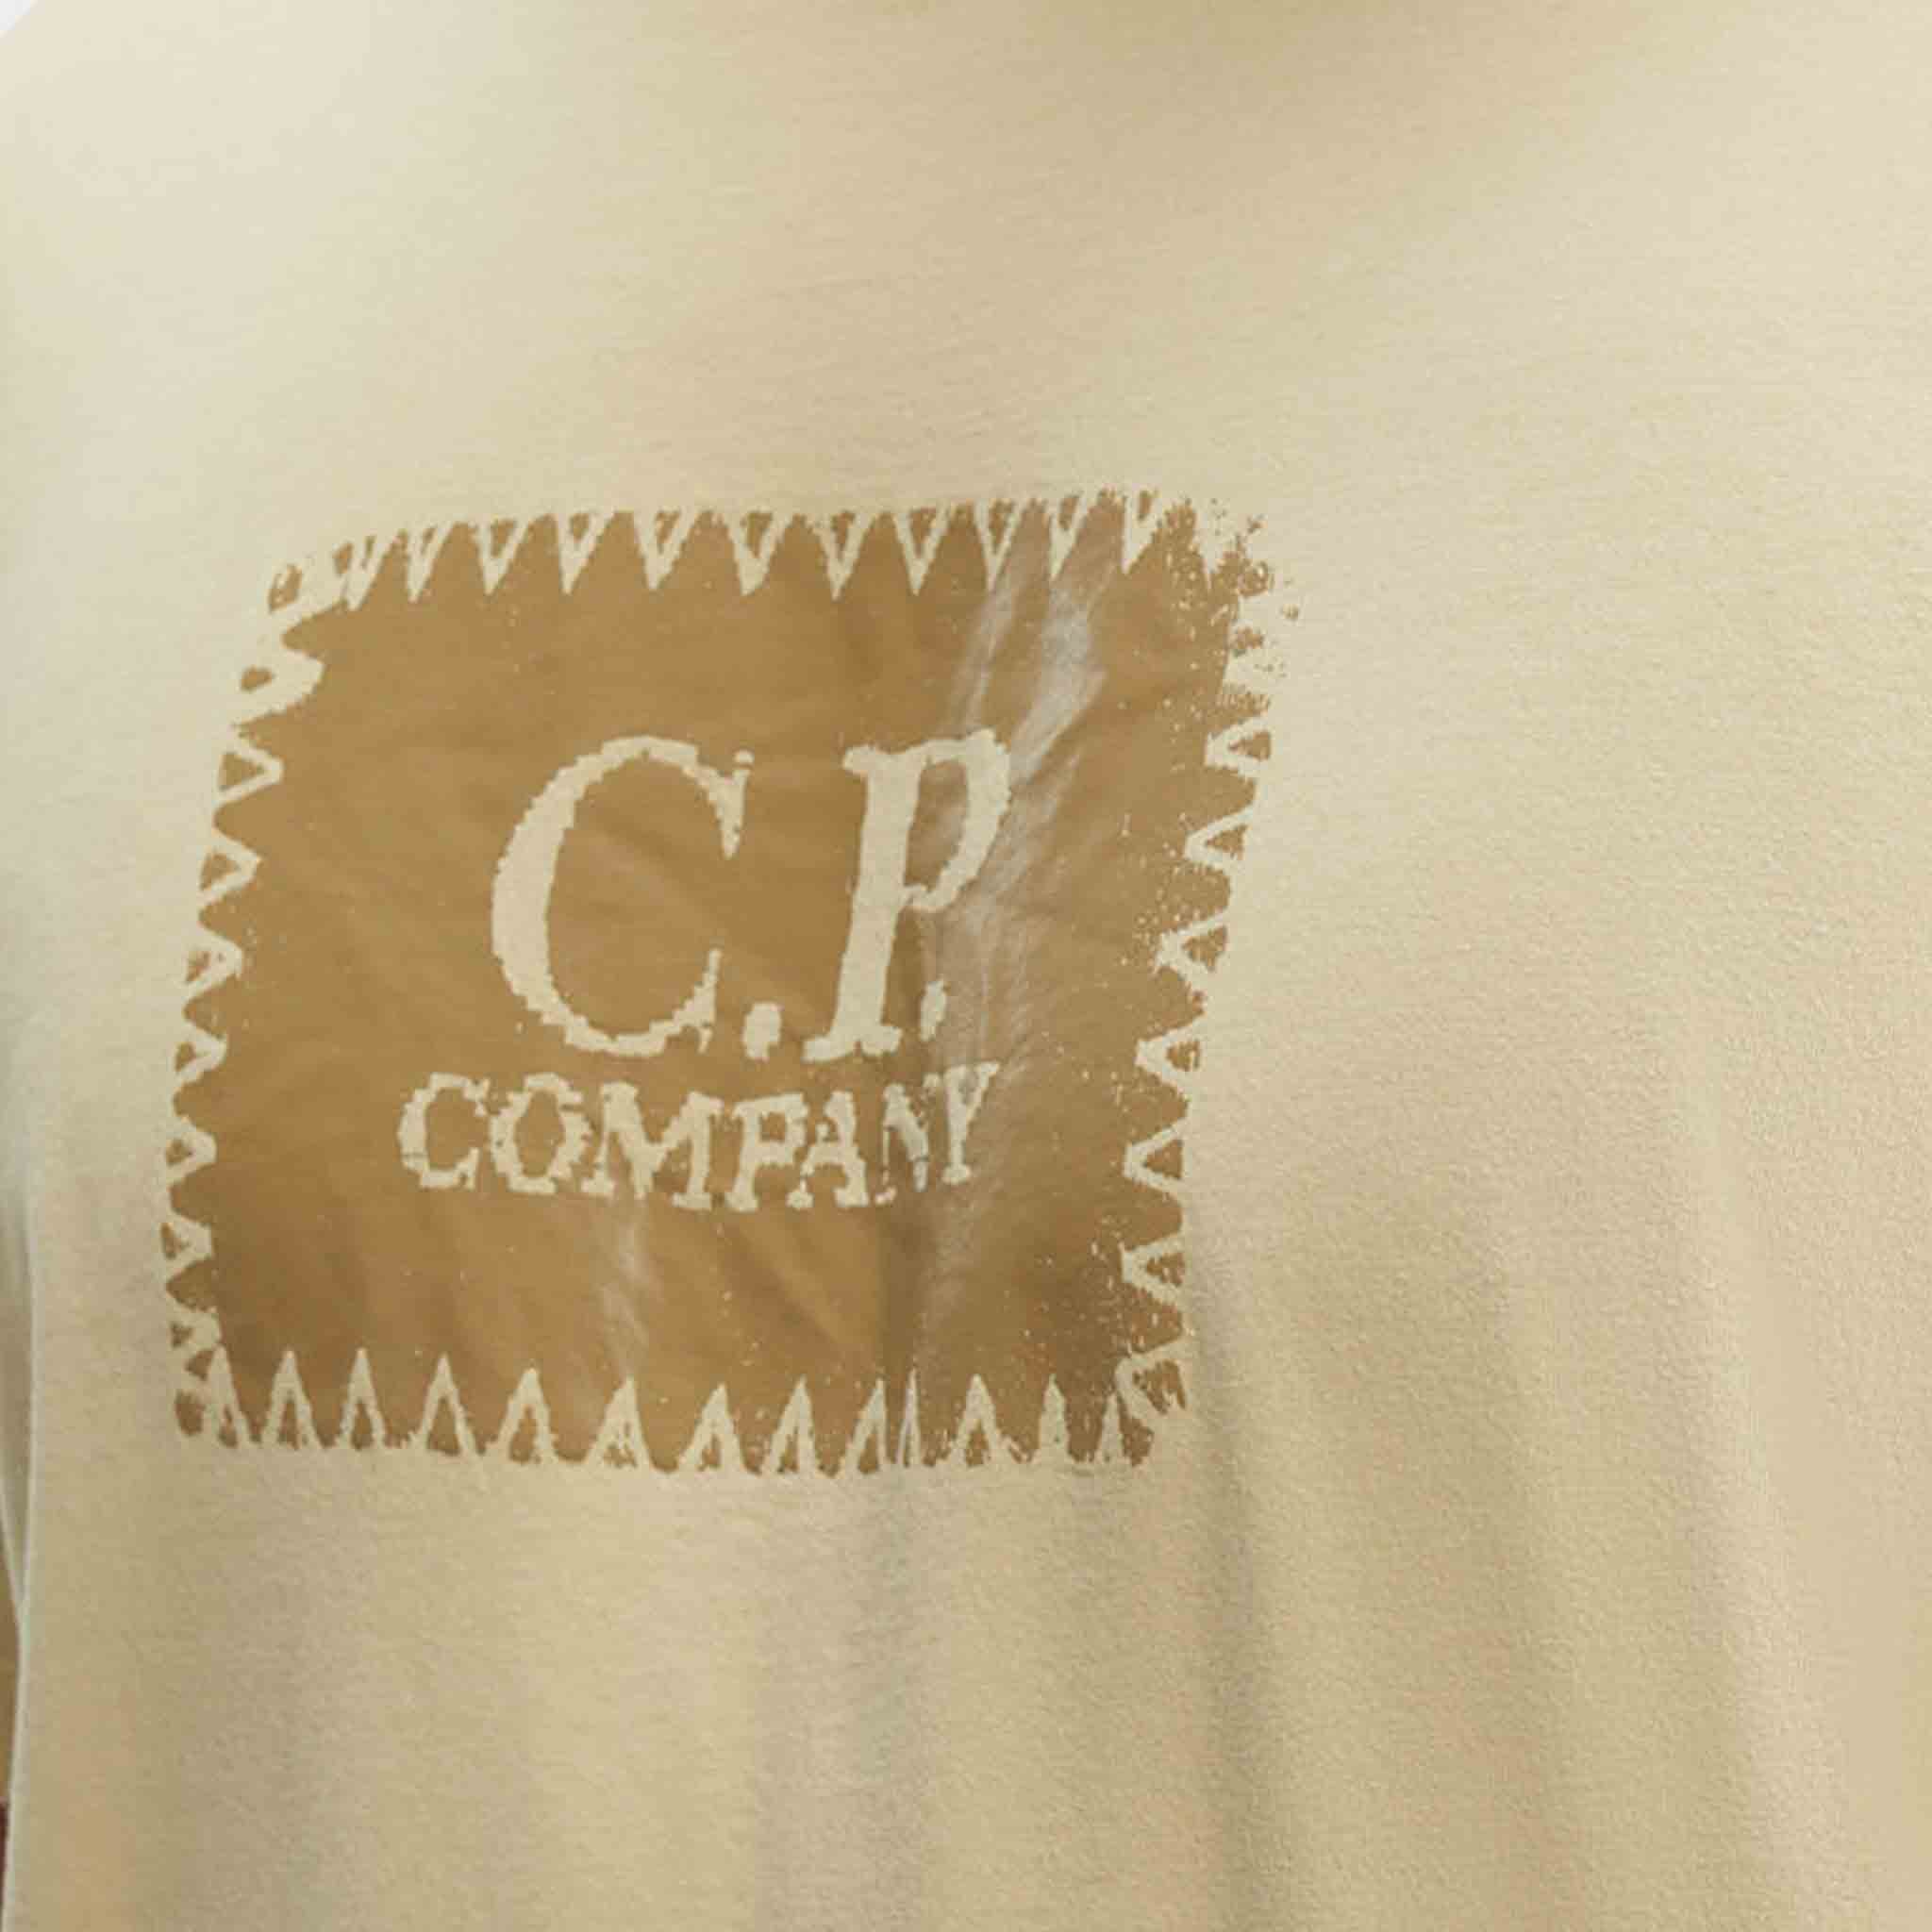 C.P. Company 30/1 Jersey Label T-shirt in Mojade Desert- Yellow